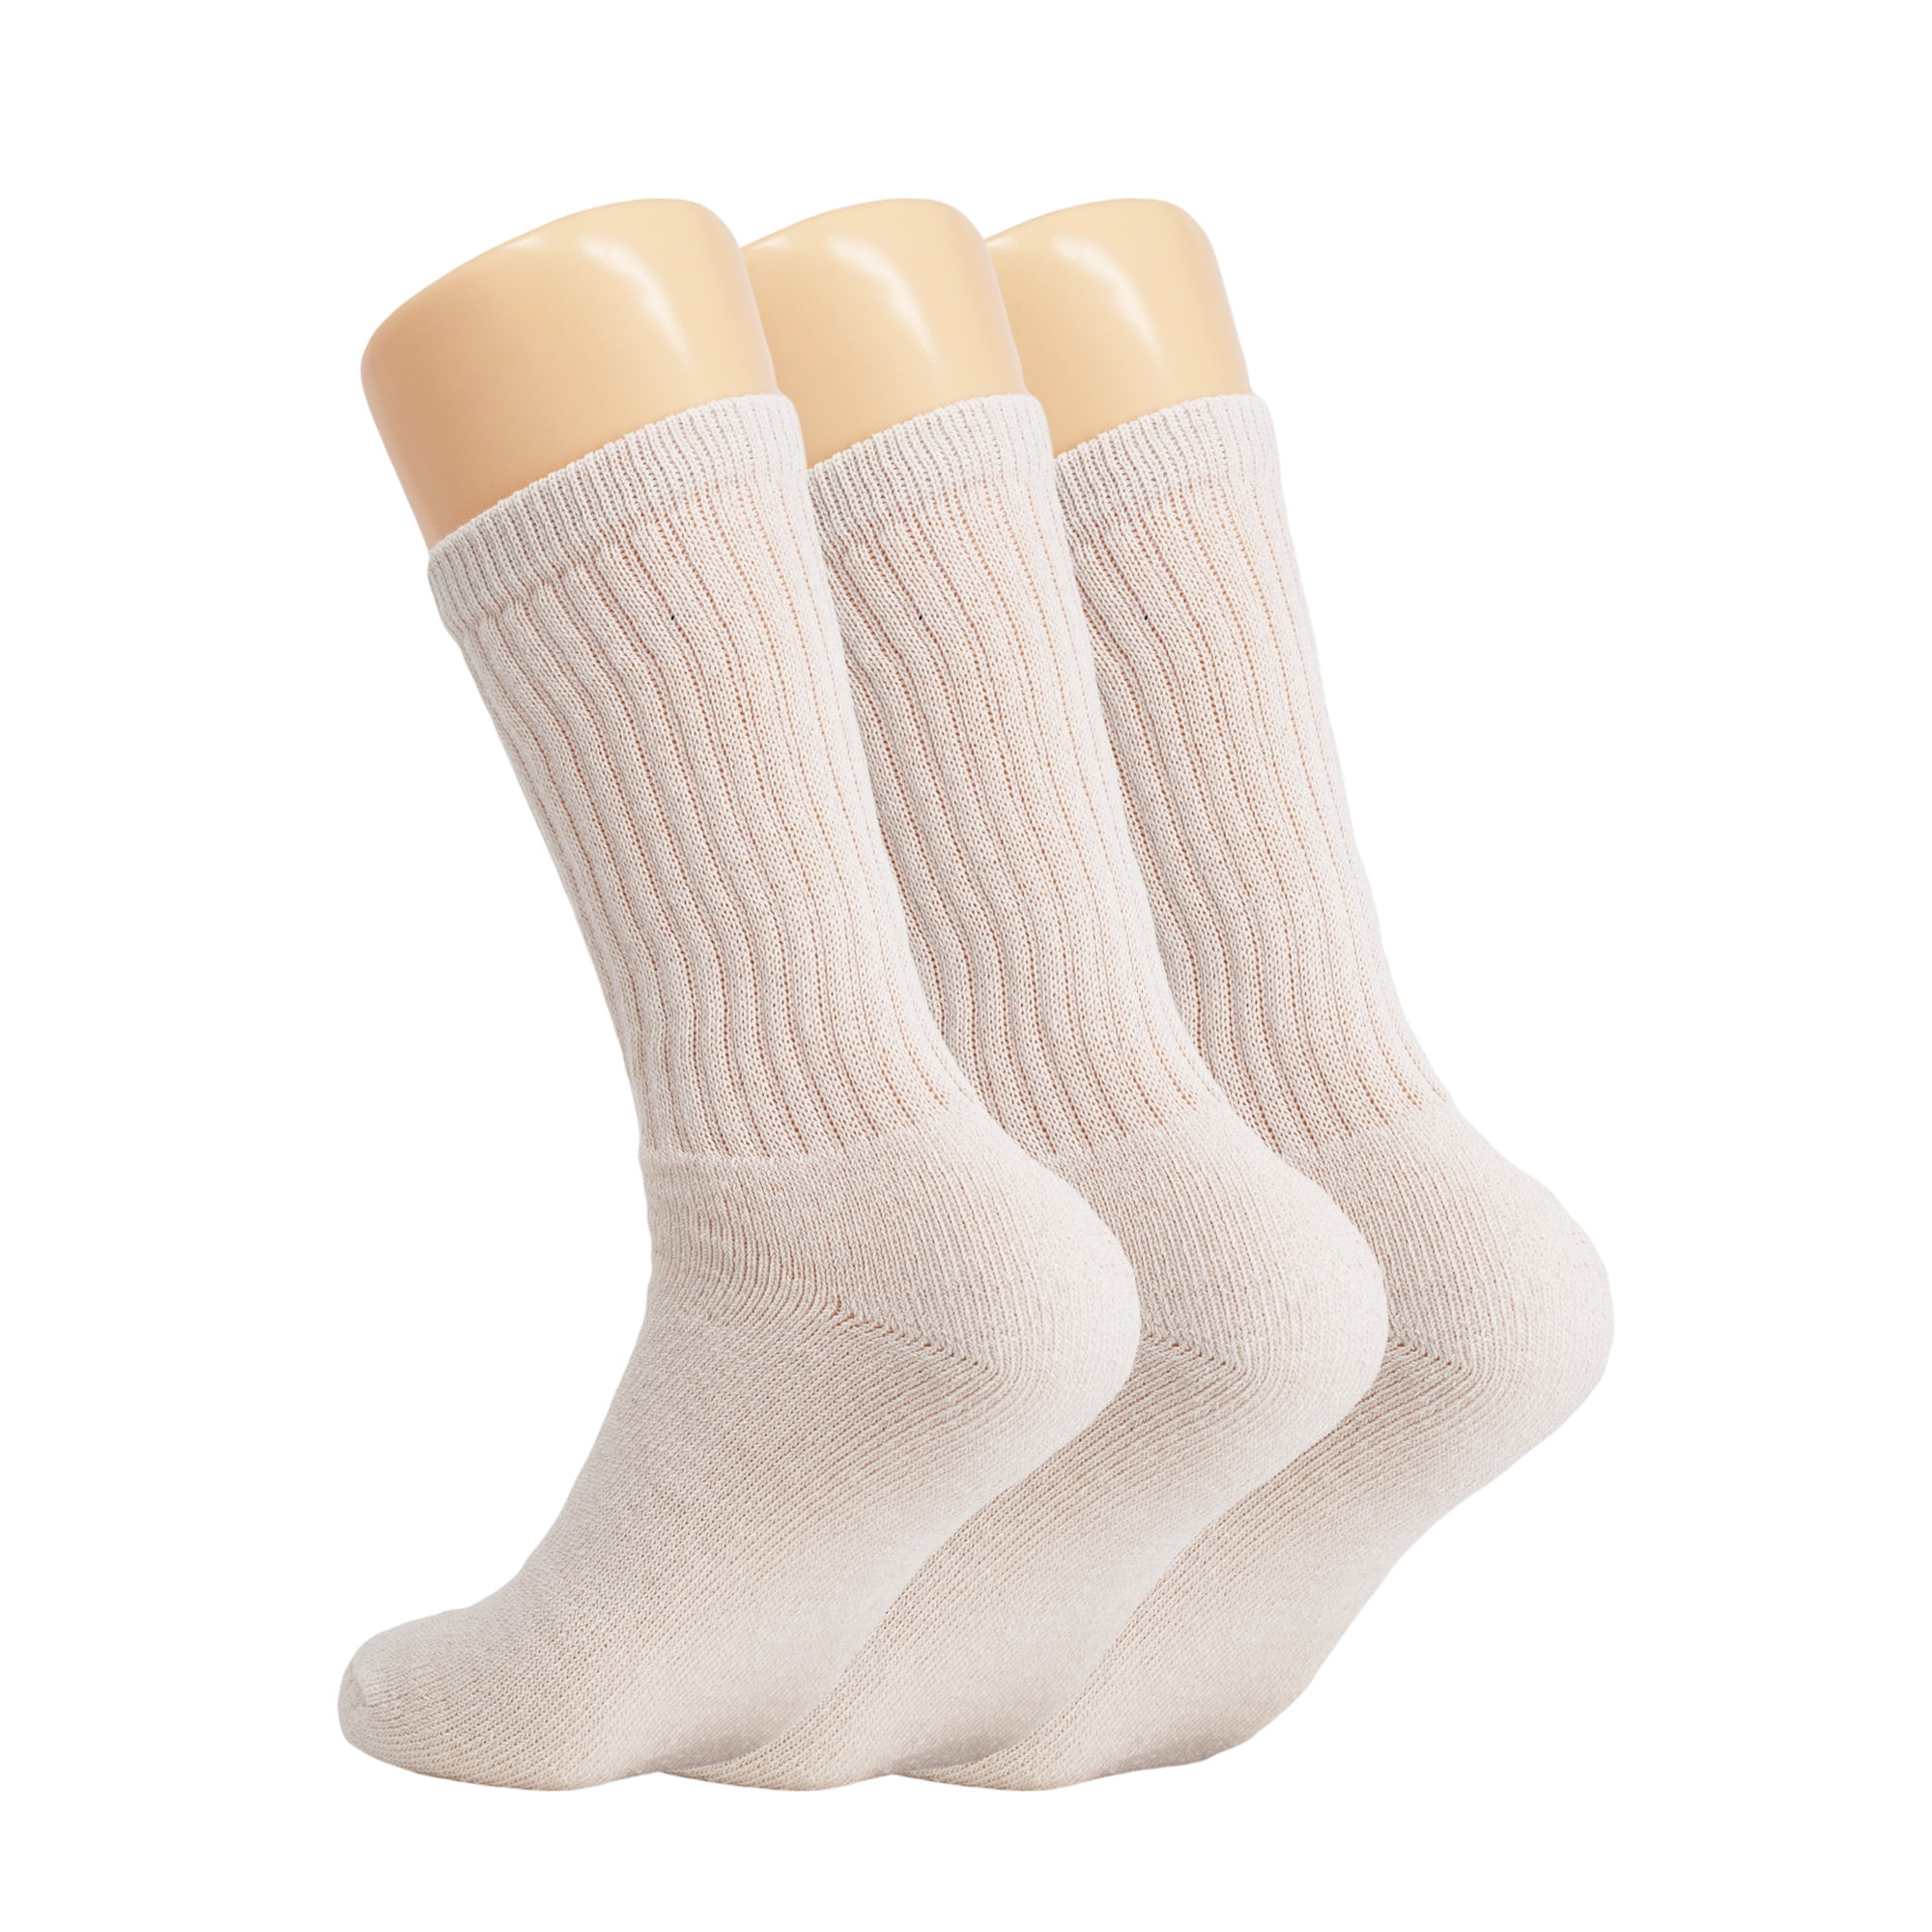 Cotton Crew Socks for Women White 3 Pairs Size 9-11 